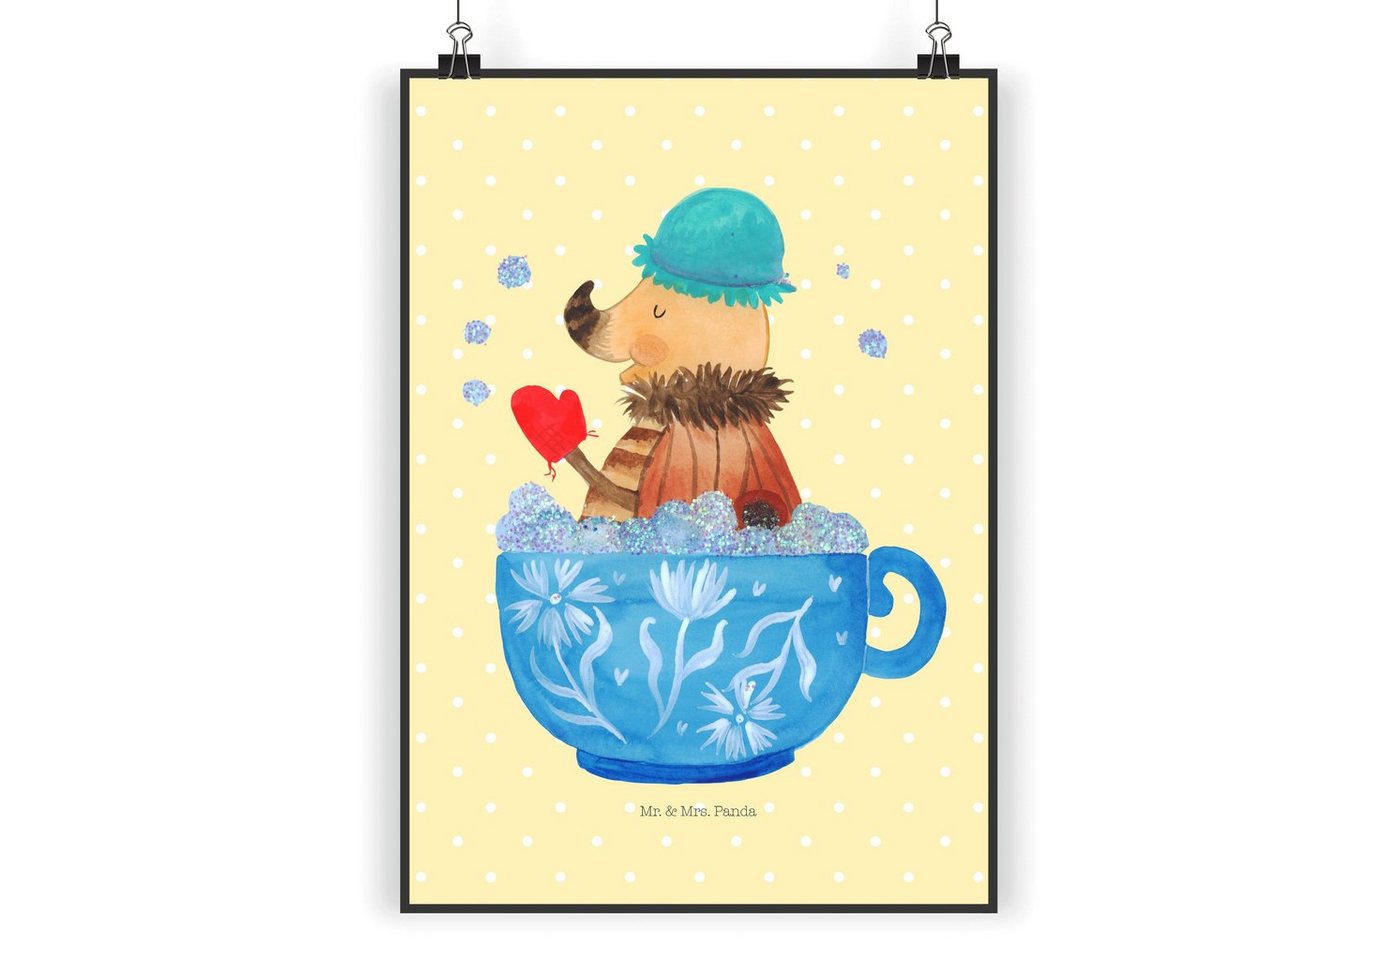 Mr. & Mrs. Panda Poster DIN A3 Nachtfalter Schaumbad - Gelb Pastell - Geschenk, Wanddeko Bild, Nachtfalter Schaumbad (1 St), Kunstvoller Druck von Mr. & Mrs. Panda